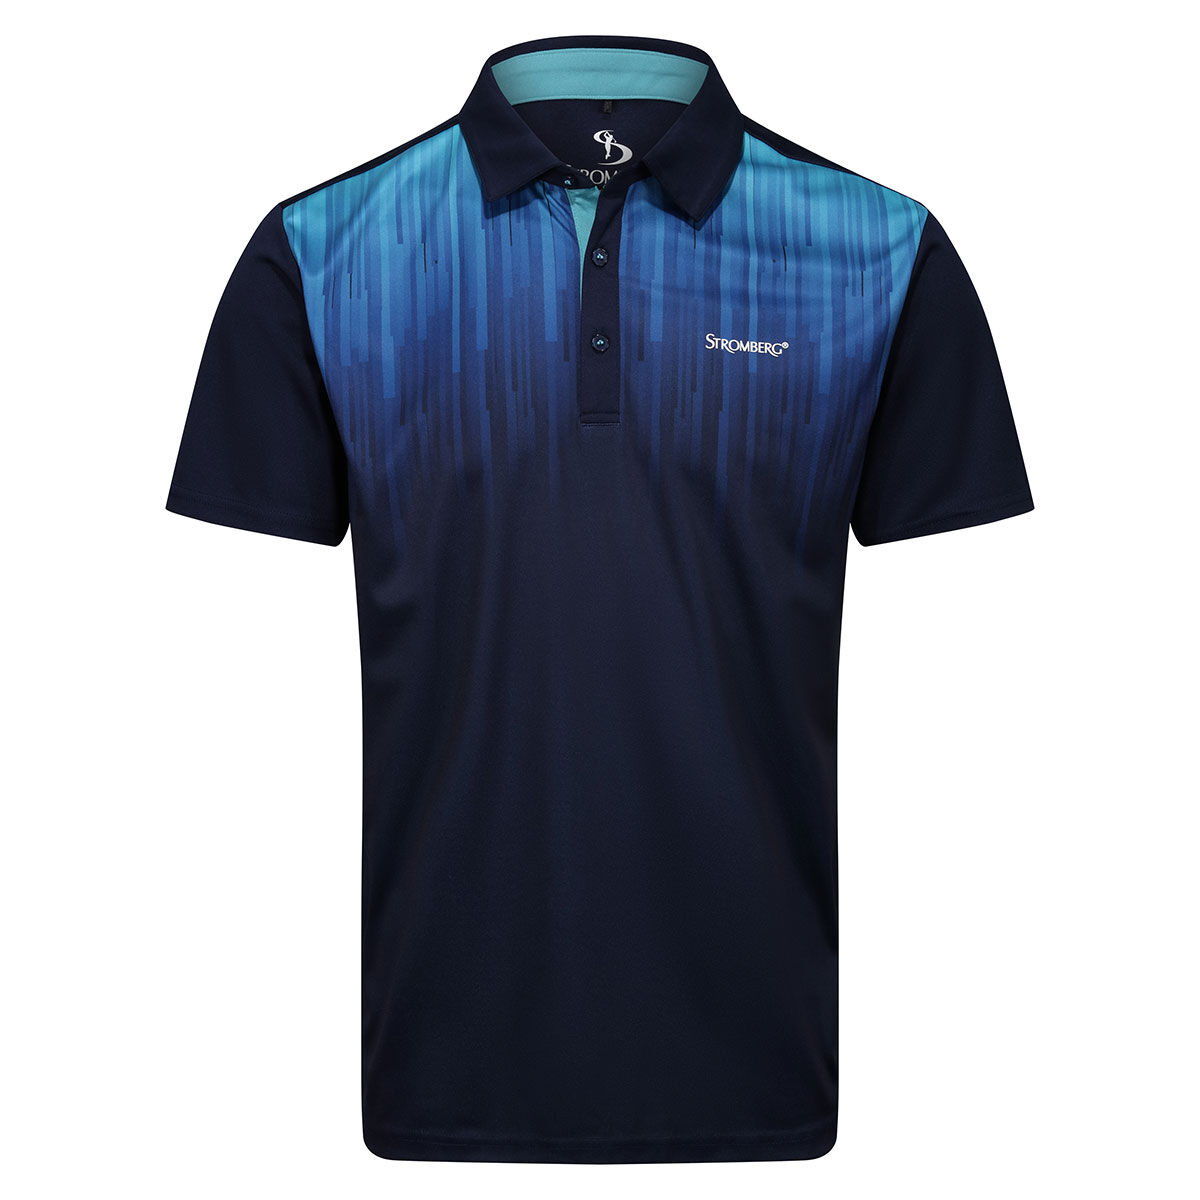 Stromberg Golf Polo Shirt, Men’s Vinson Stretch, Mens, Peacoat/true blue, Small | American Golf